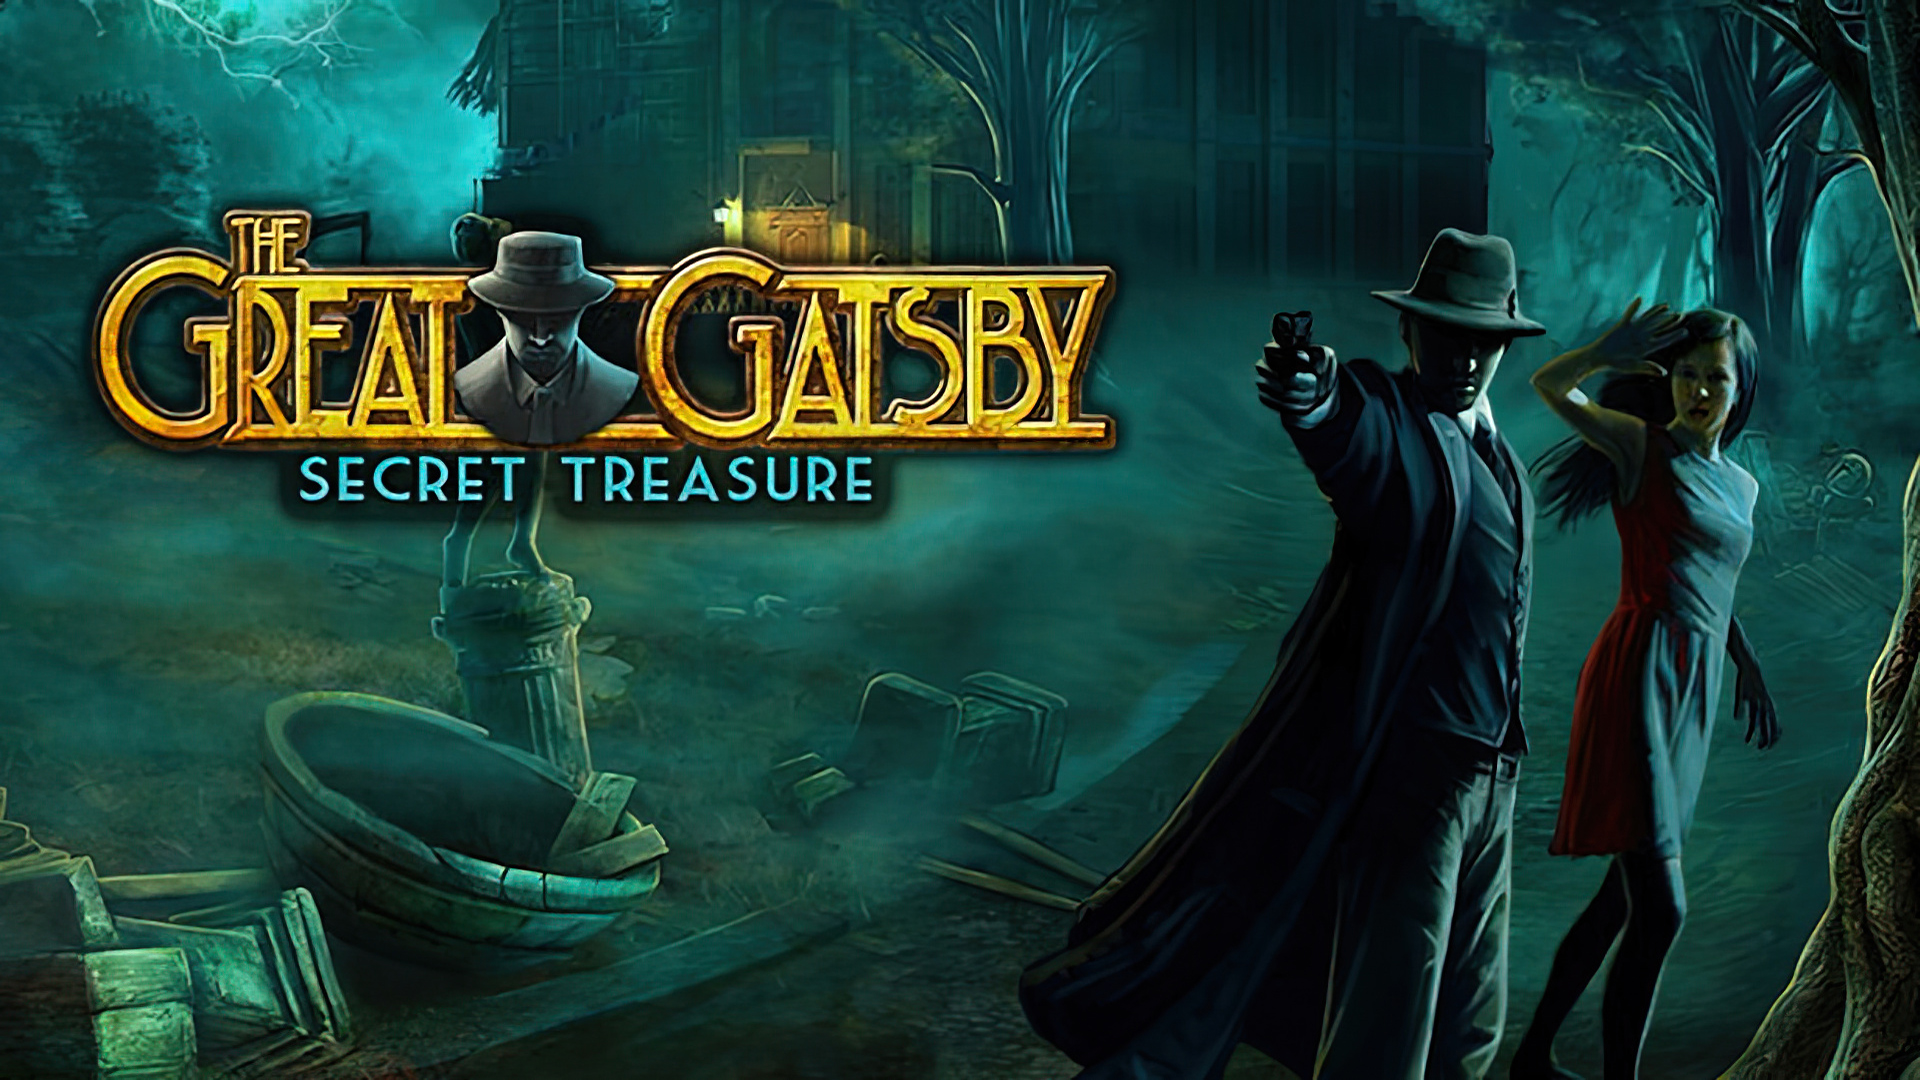 Steam secret. The great Gatsby: Secret Treasure. Secret Treasure (Сикрет Треже) м. Игра Великий Гэтсби тайное сокровище. Игры компании Treasure обложки.